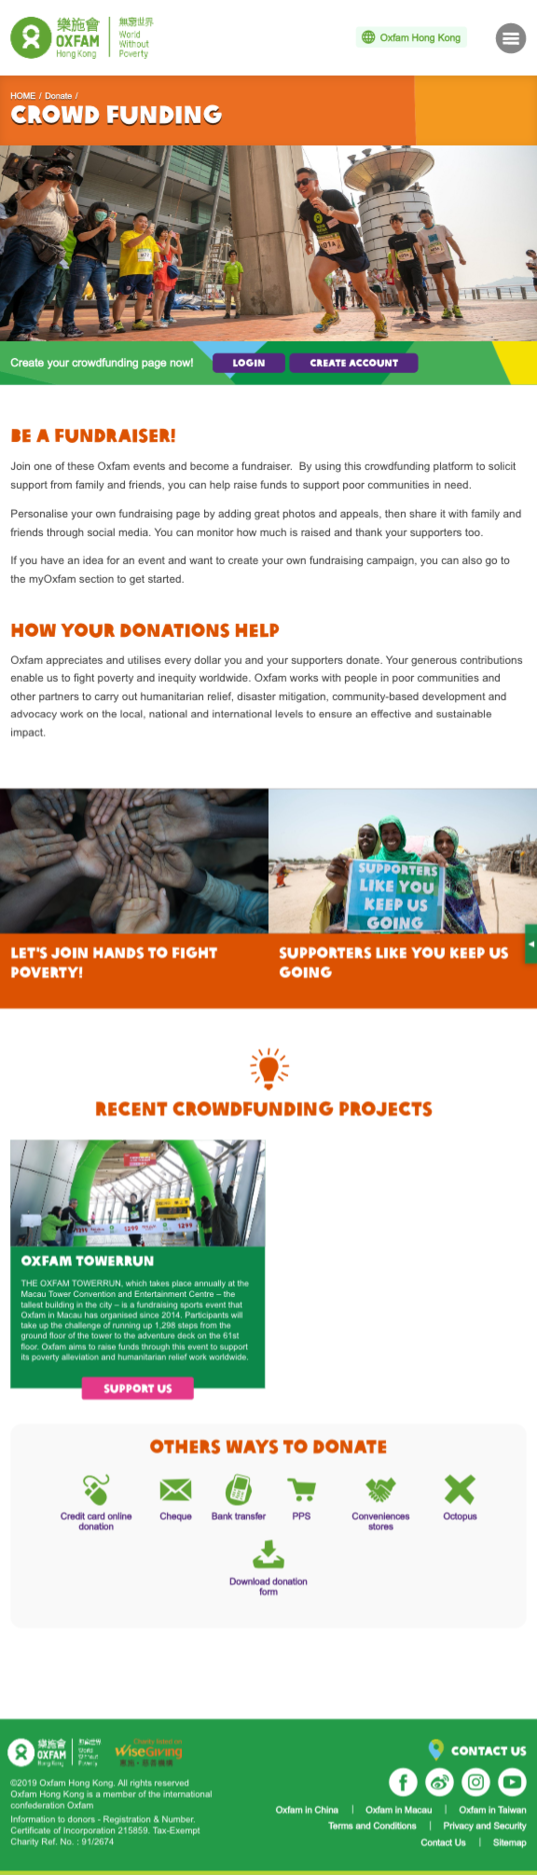 Oxfam Hong Kong Tablet Crowdfunding 